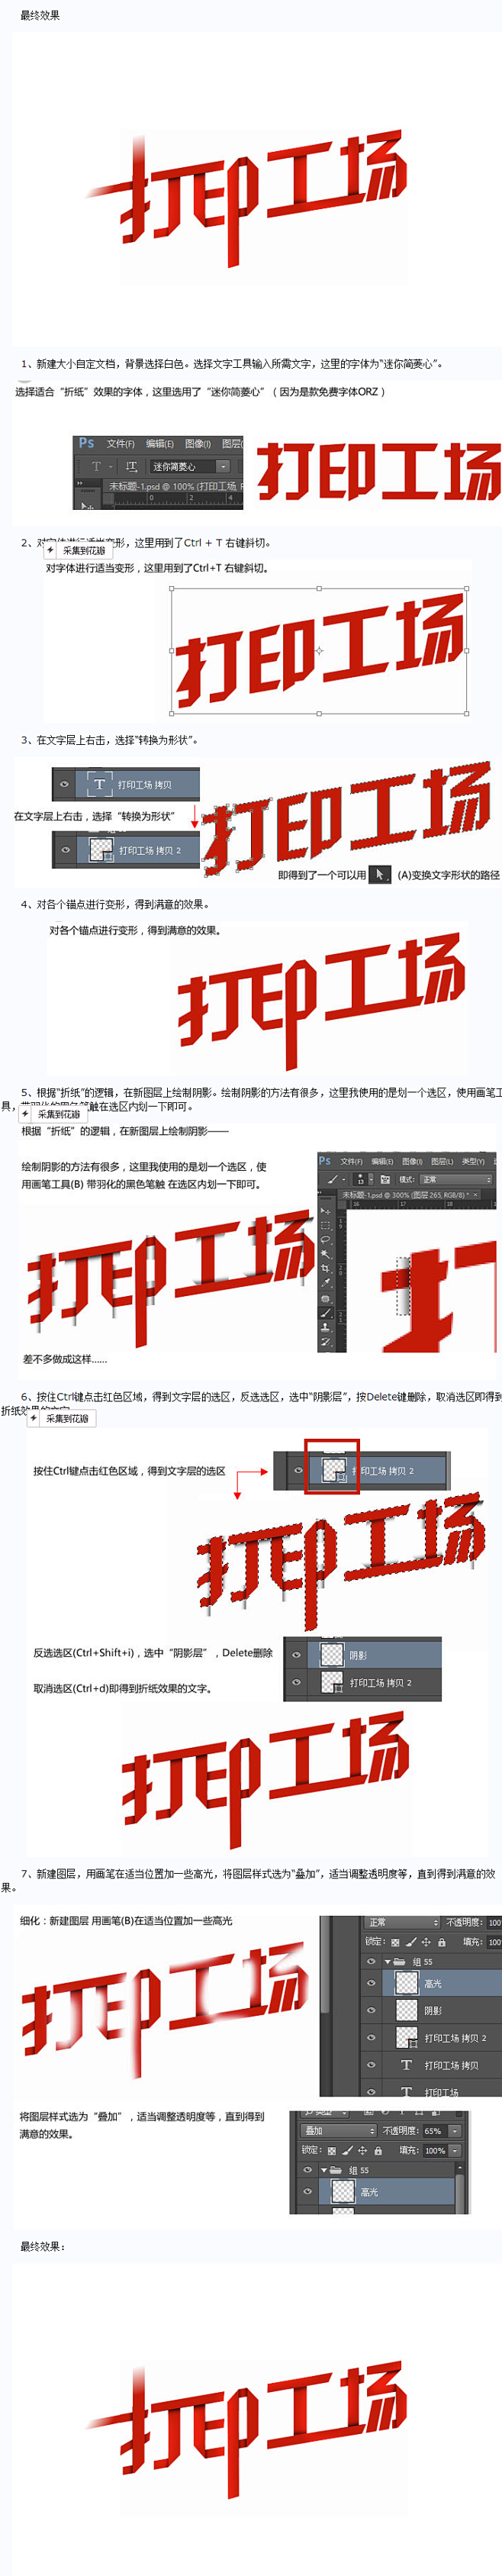 PhotoShop CS6红色折纸字体制...